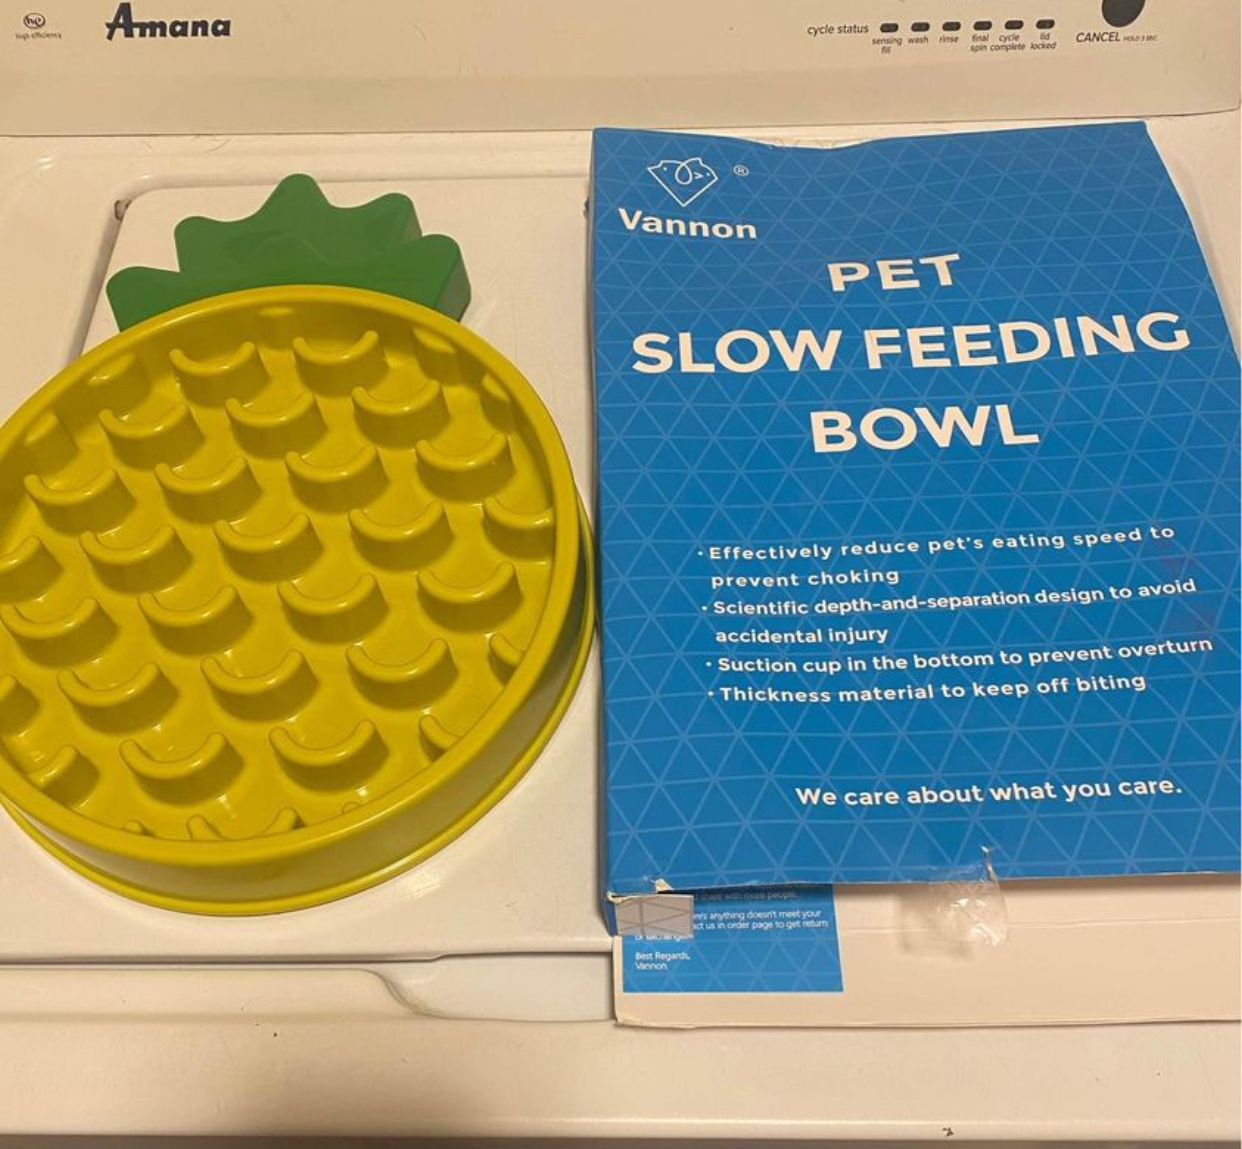 Pet slow feeding bowl